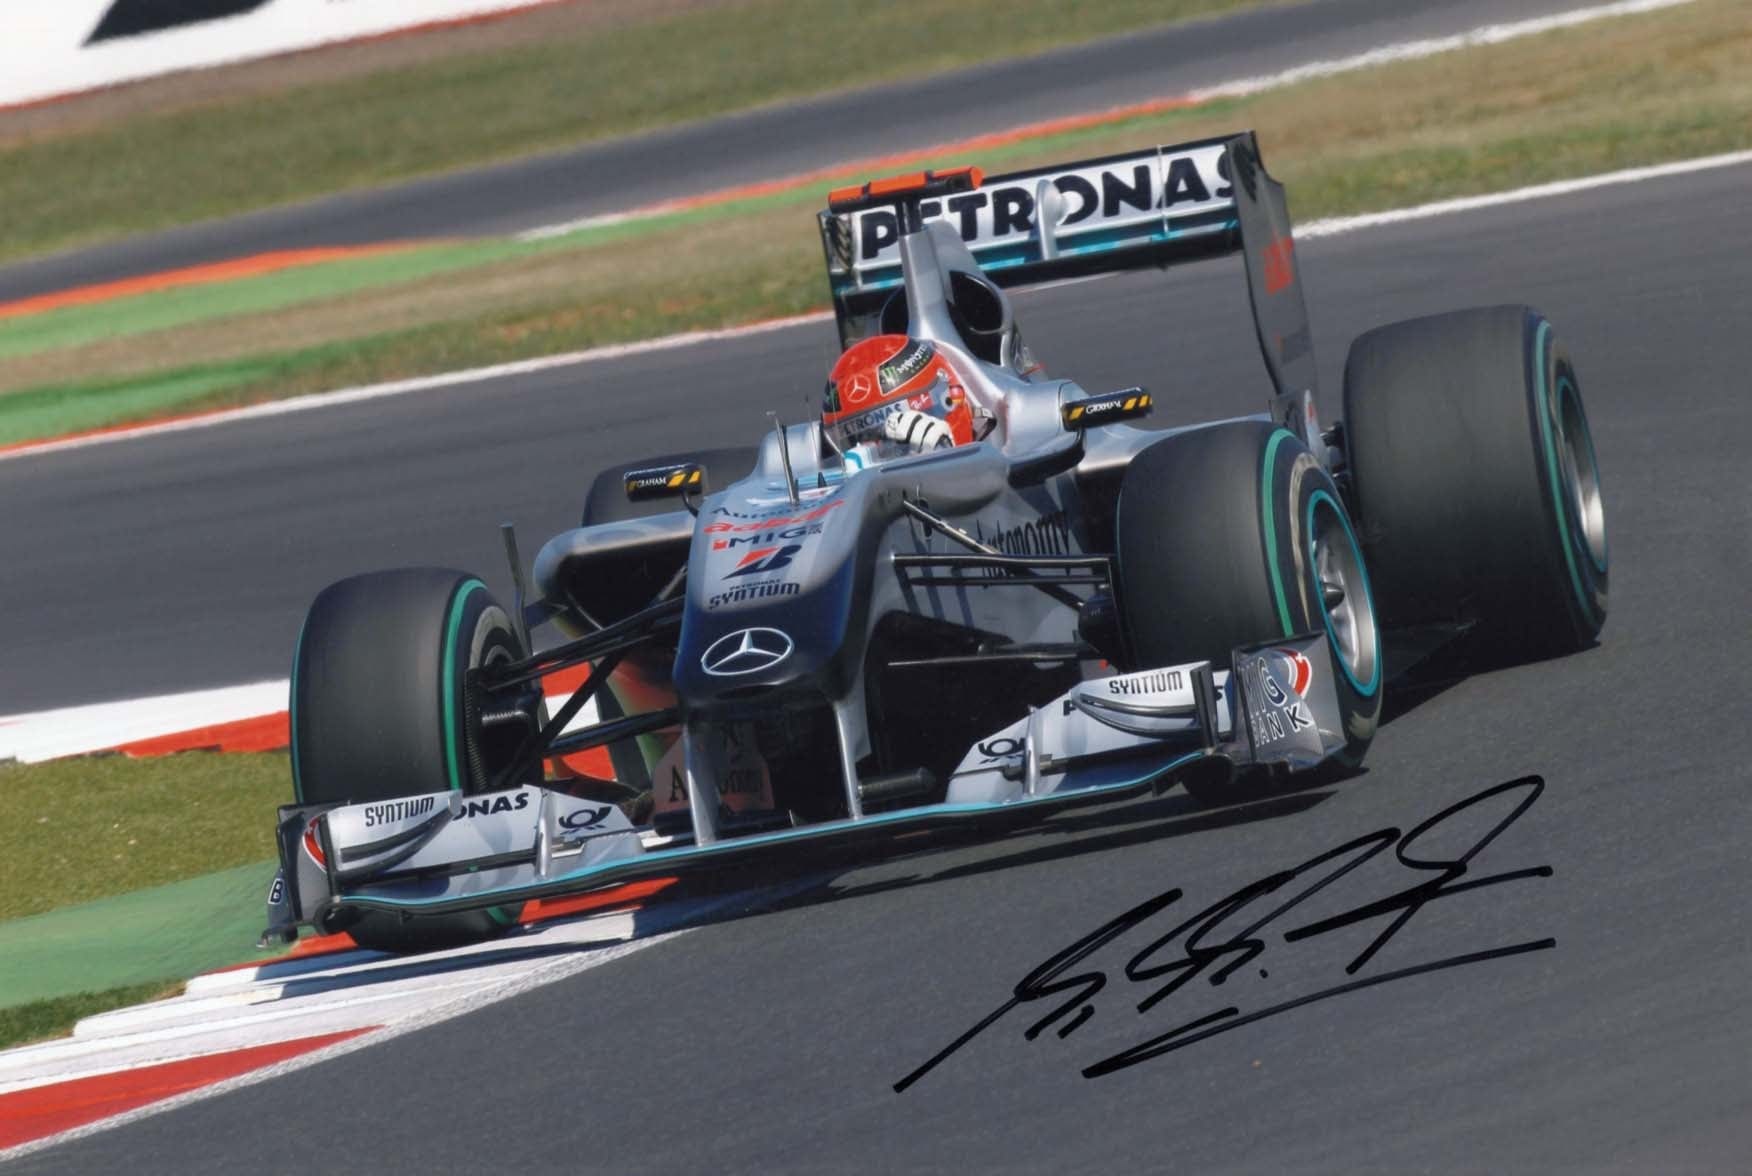 Michael Schumacher Autograph Autogramm | ID 7895279173781